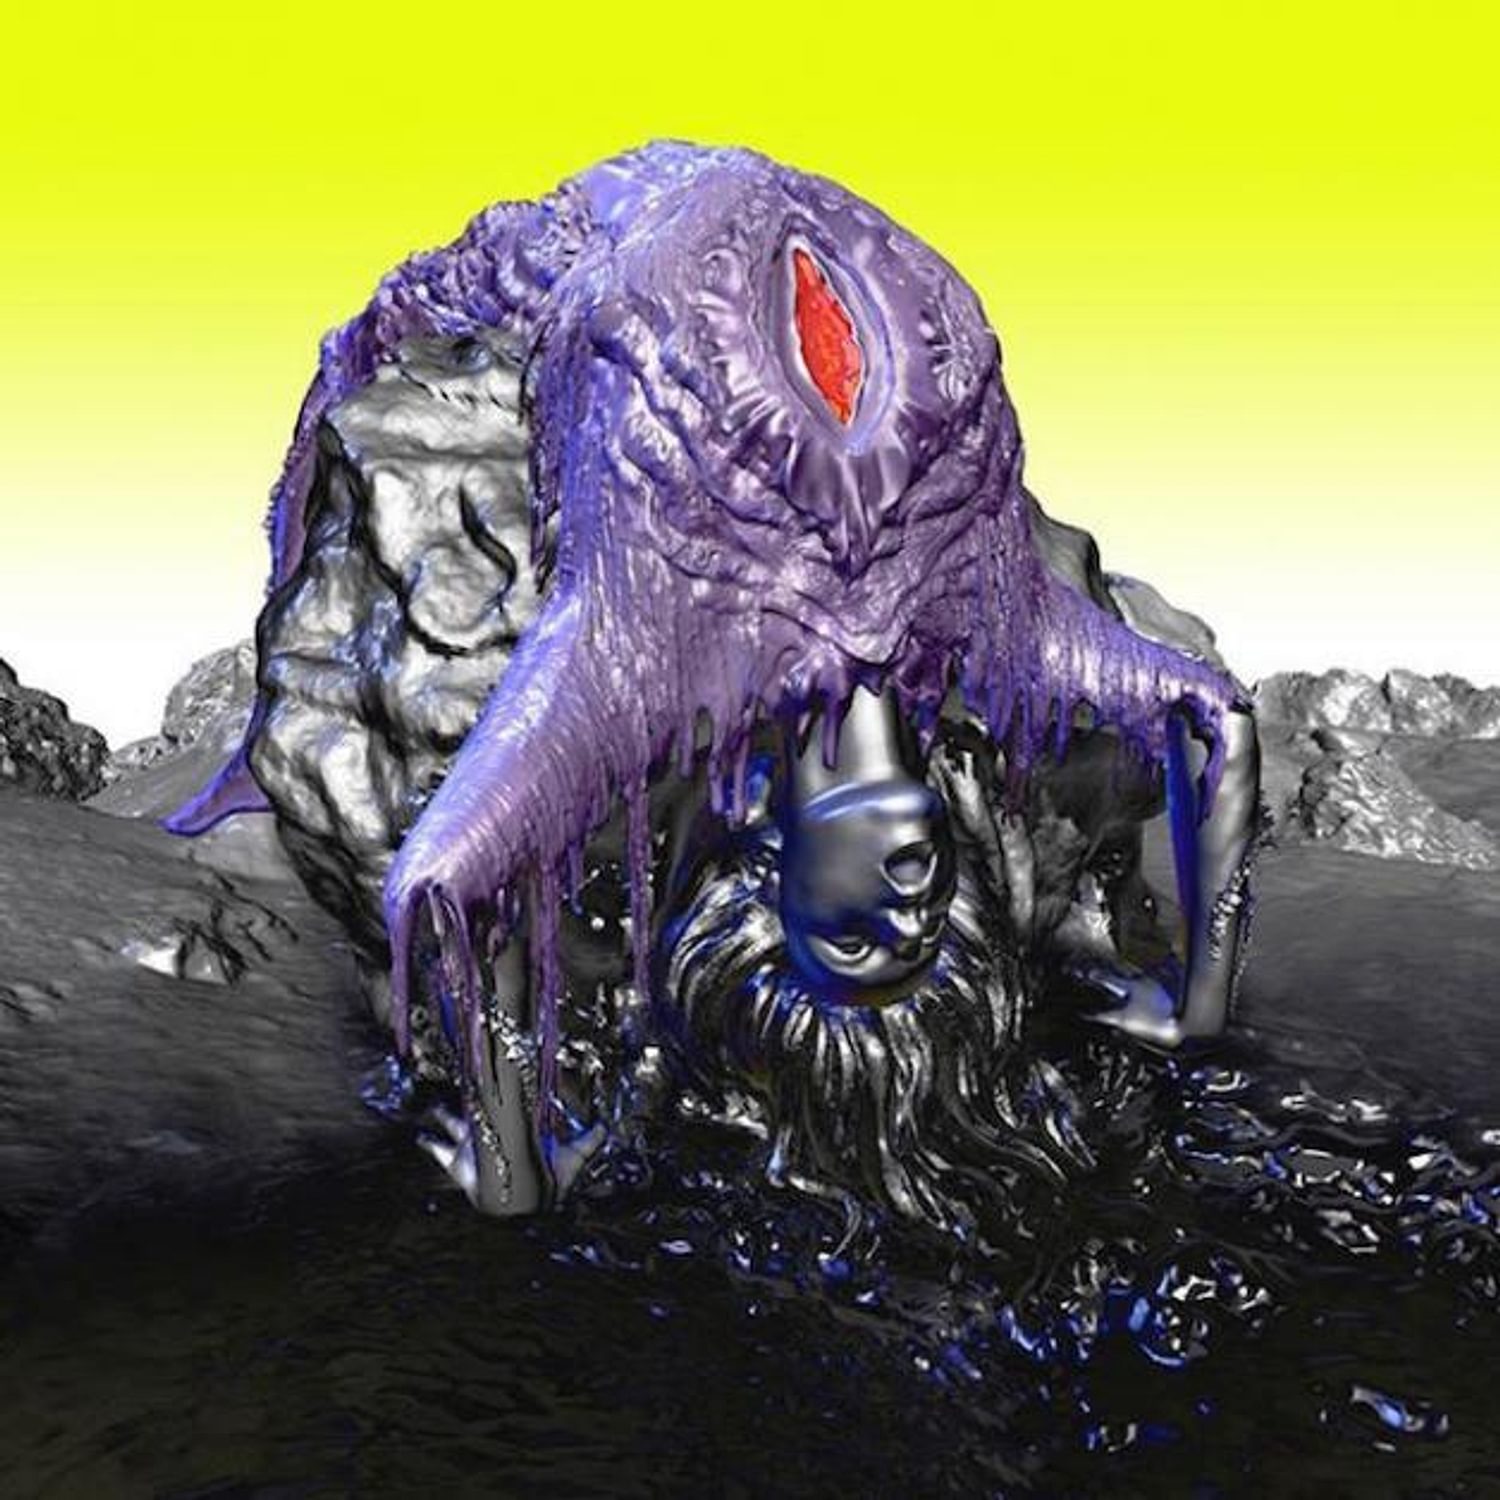 Bjork reveals cover art for ‘Vulnicura’ physical release